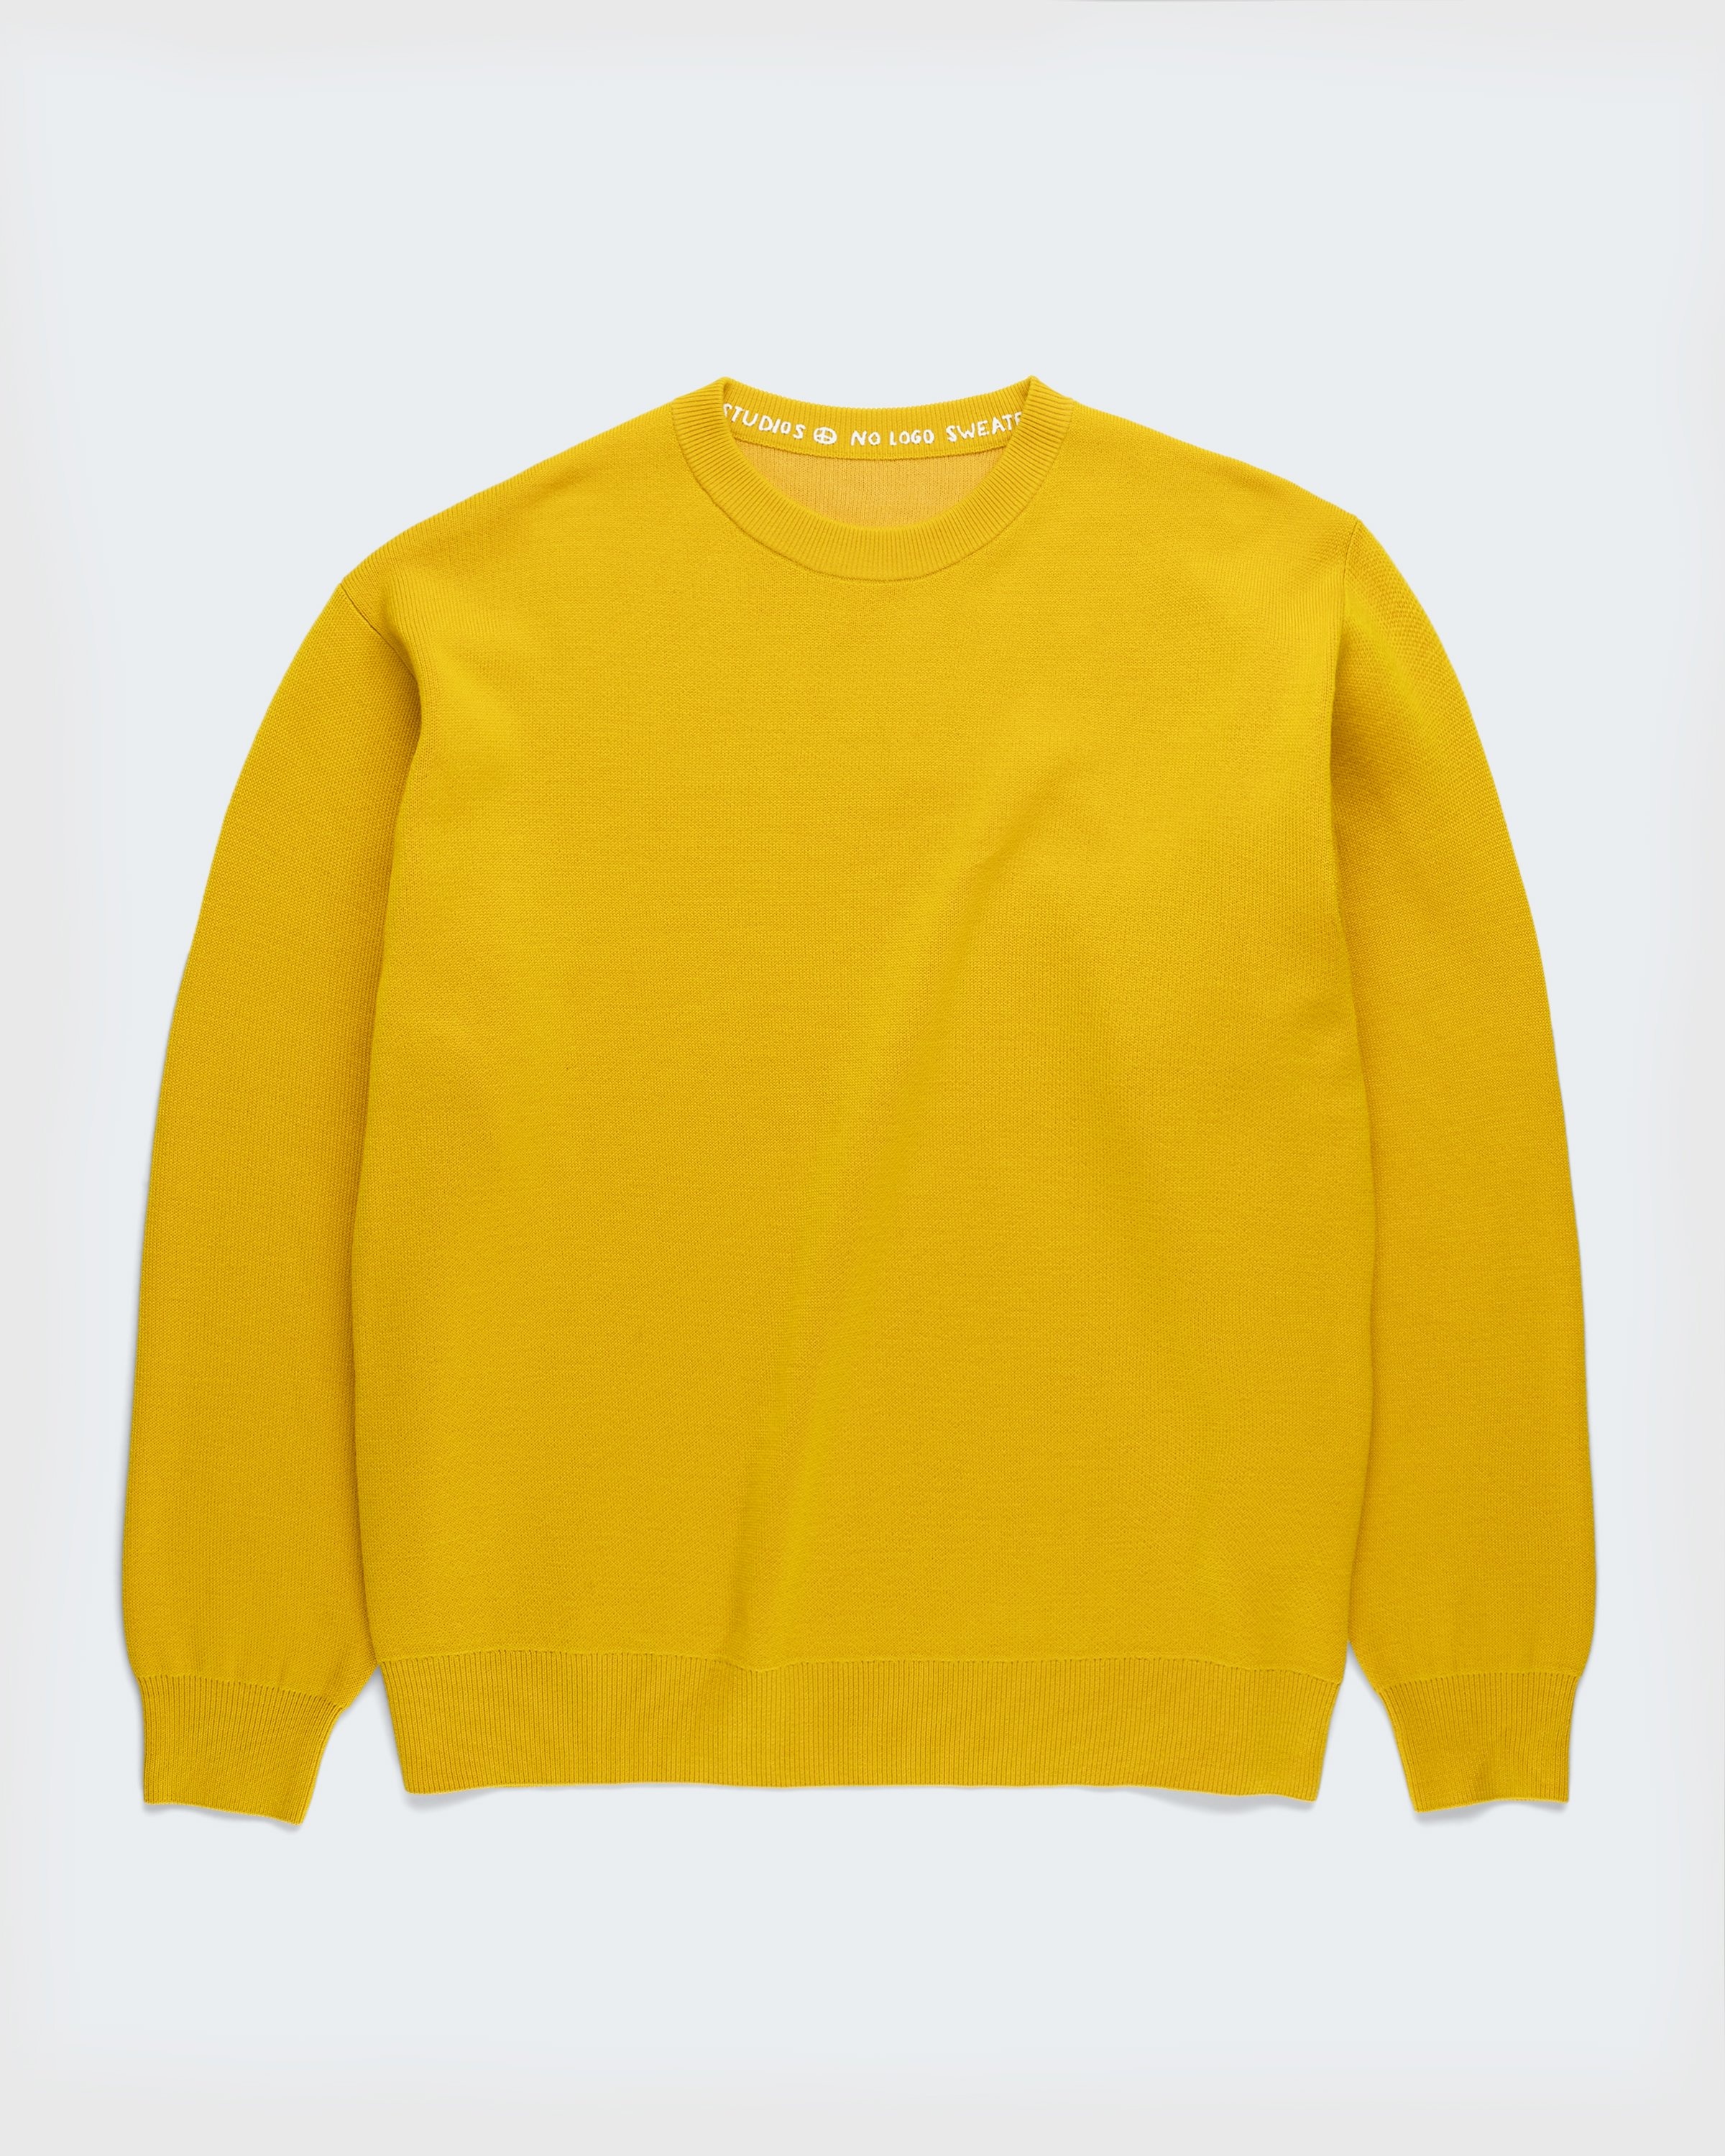 Acne Studios – Merino Wool Crewneck Sweater Yellow - Crewnecks - Yellow - Image 1